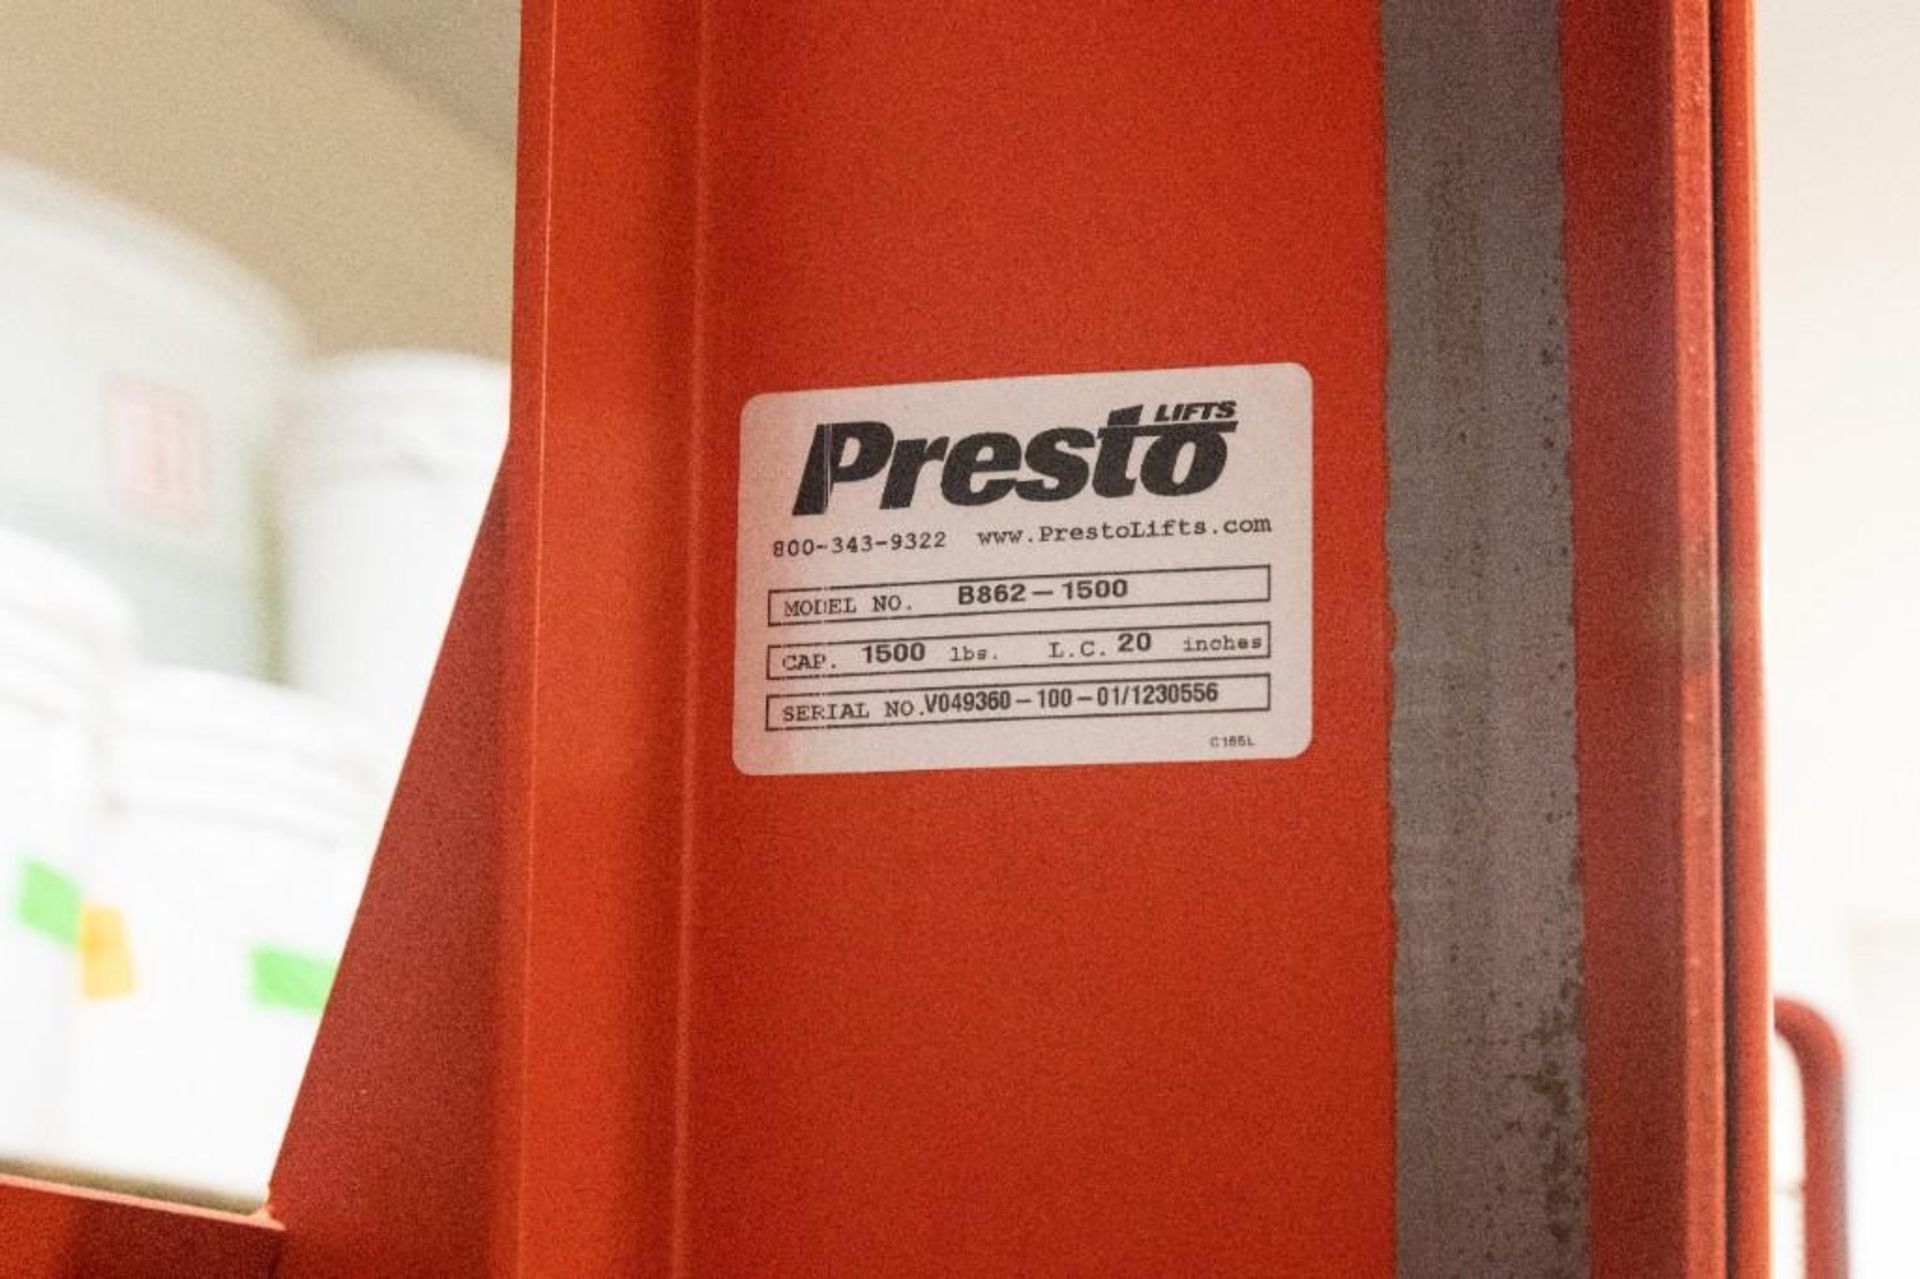 Presto Lift - Image 5 of 5